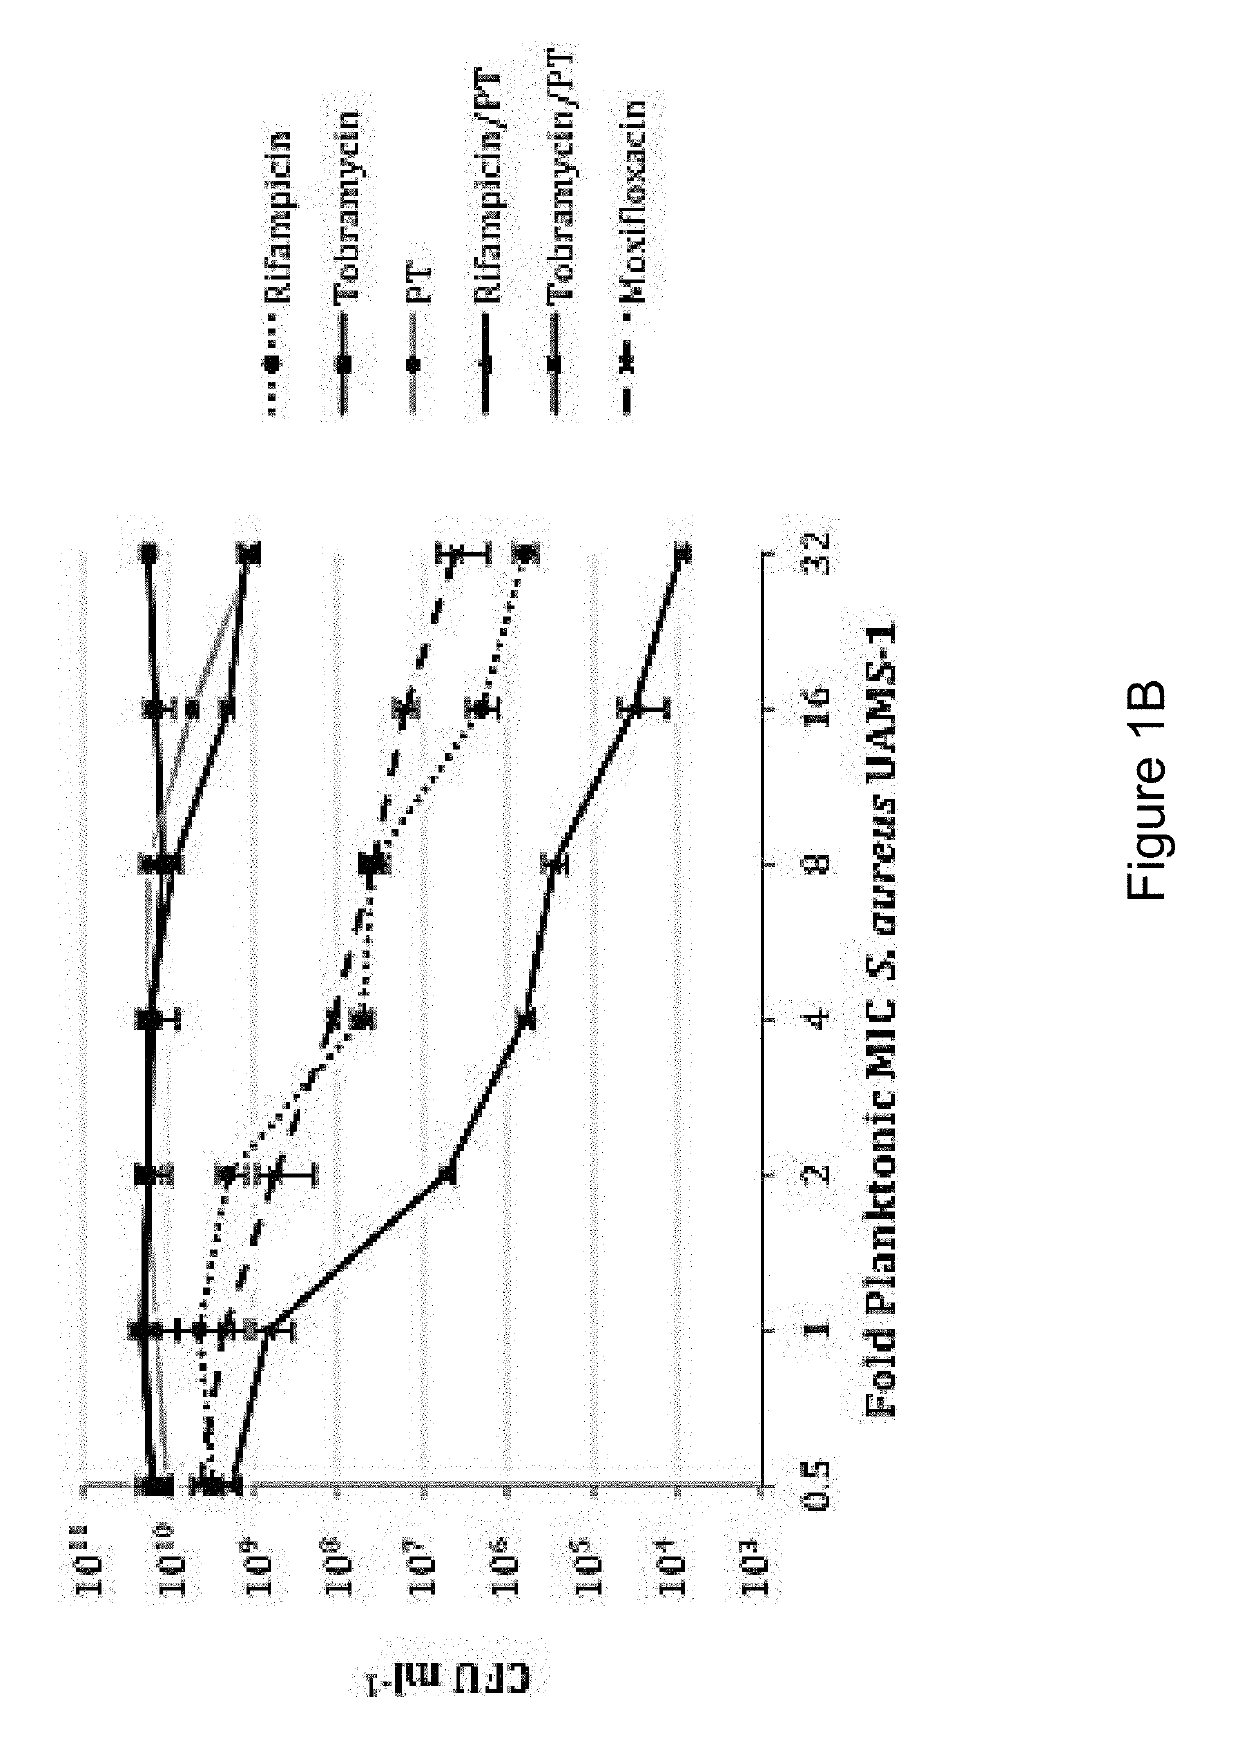 Pharmaceutical Composition Containing Polymyxin B/Trimethoprim based Therapeutics